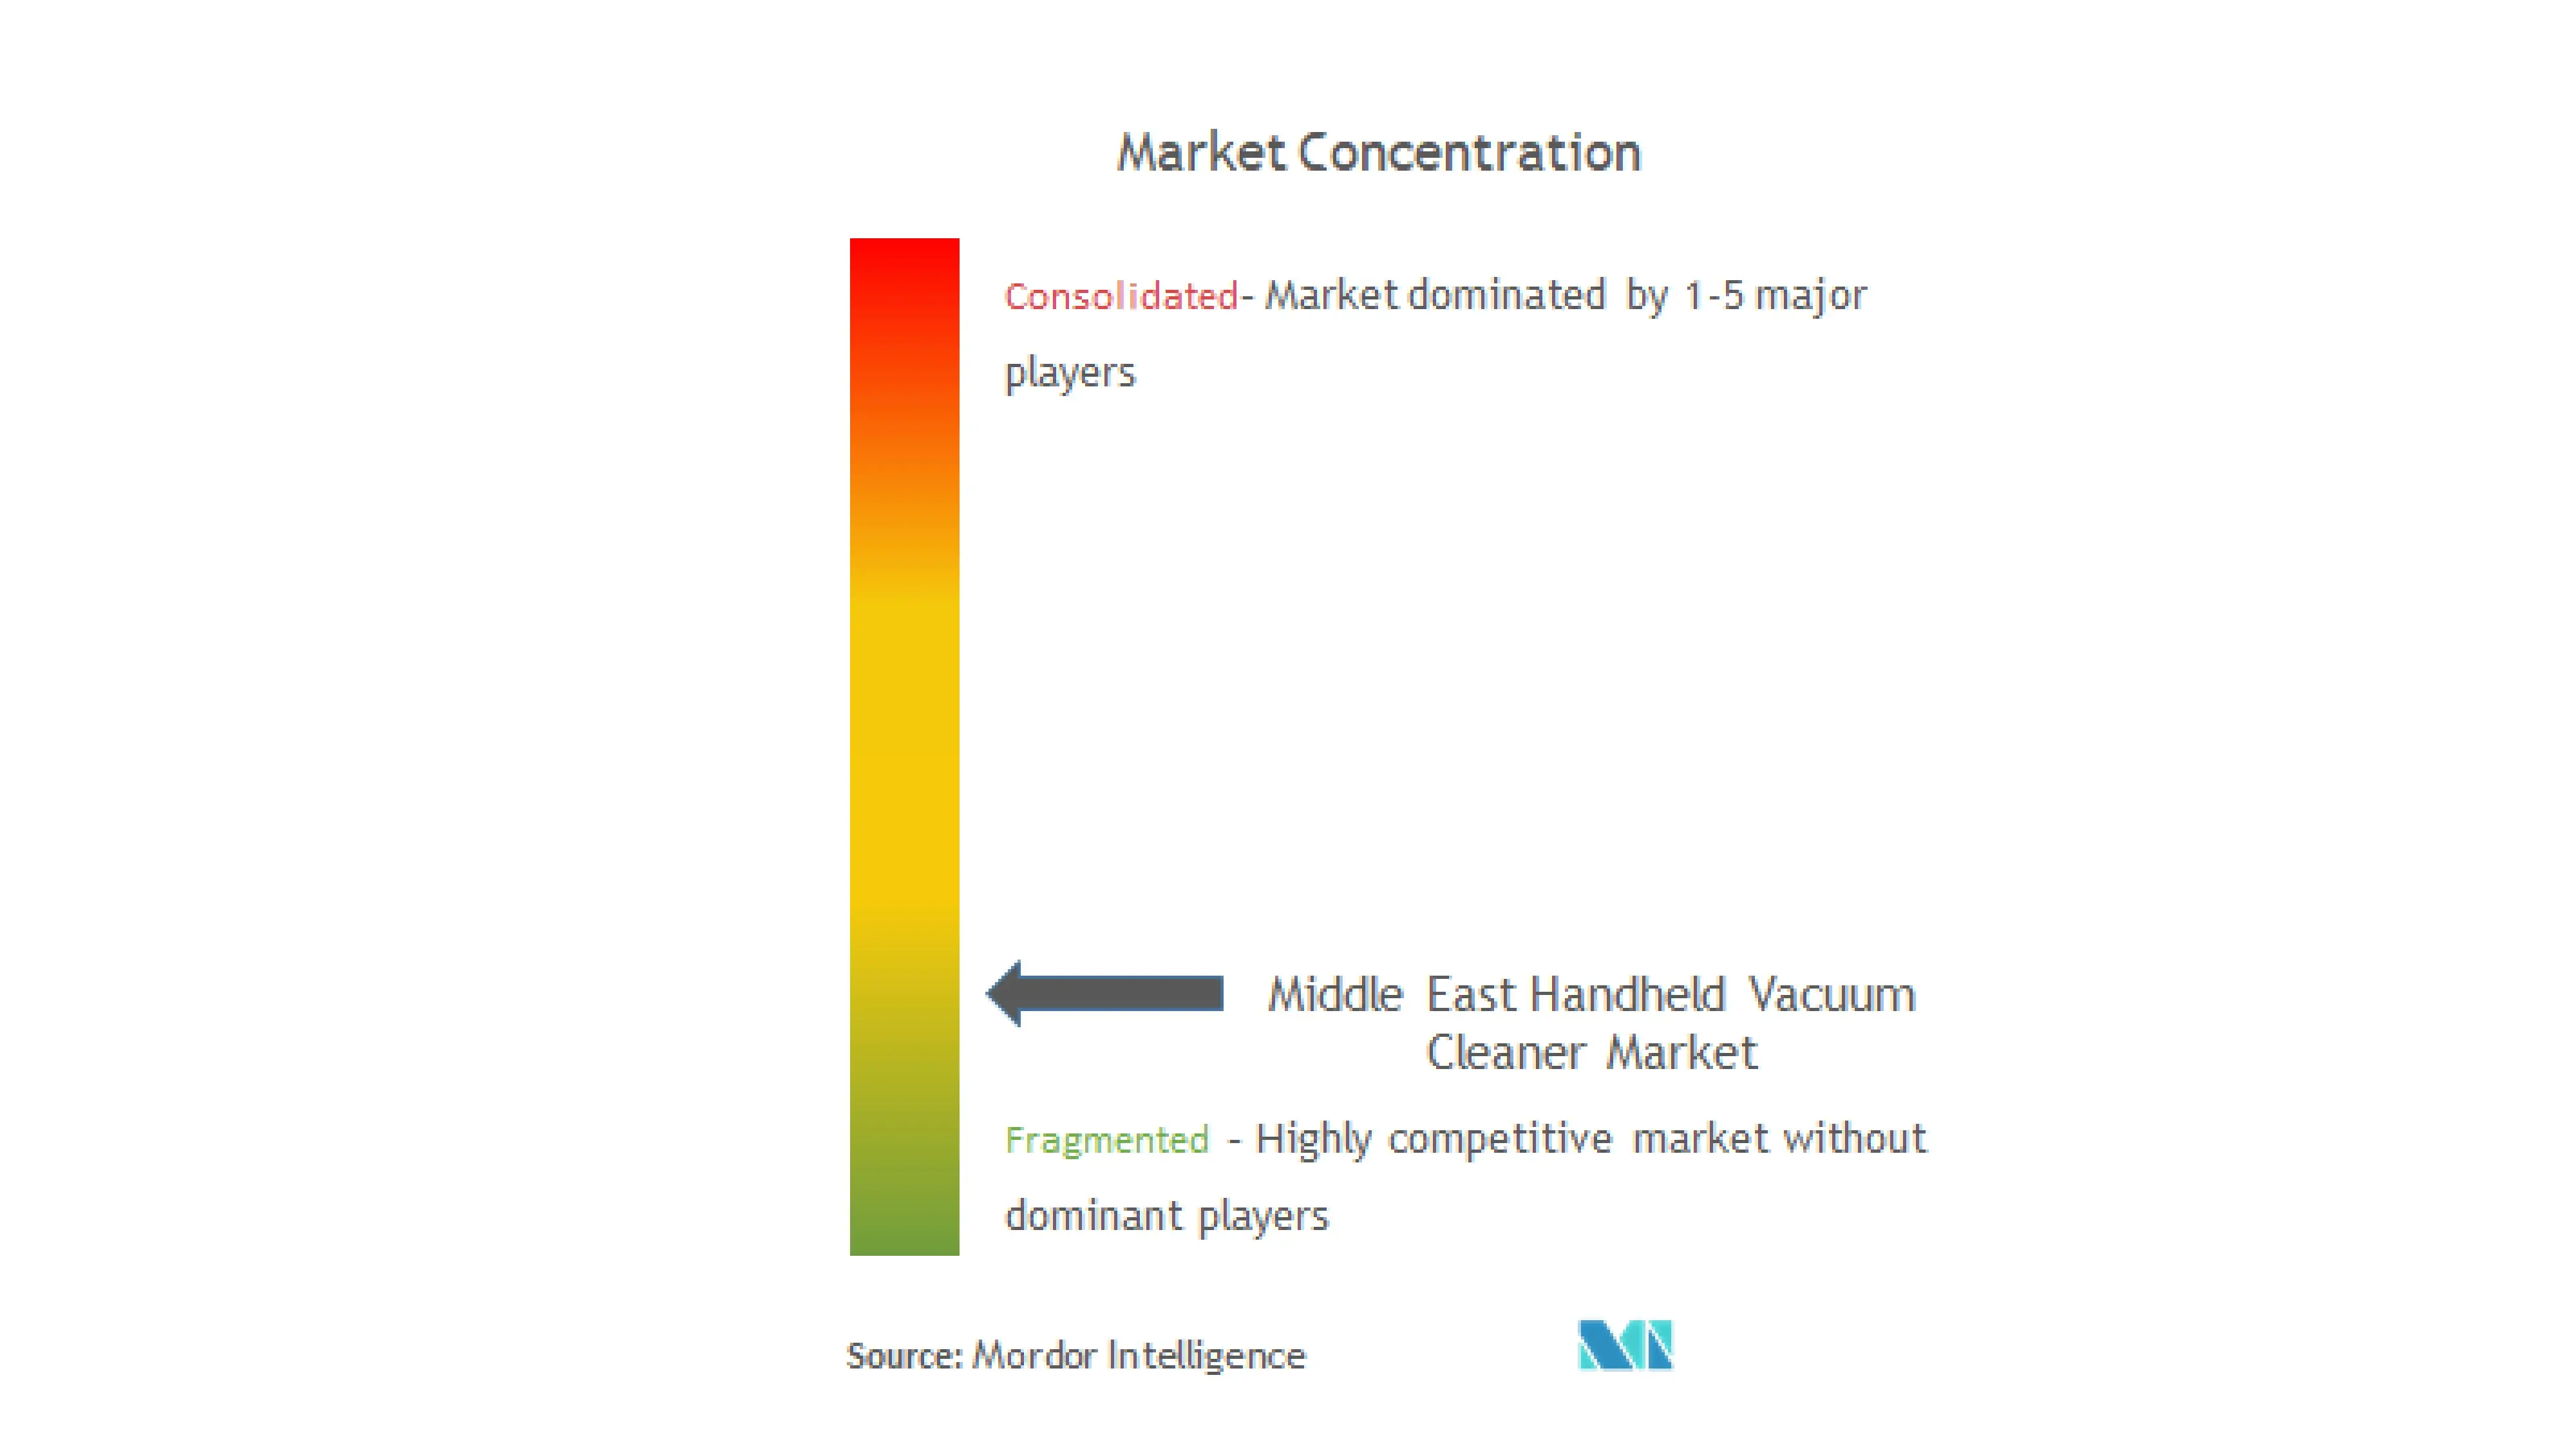 Middle East Handheld Vacuum Cleaner Market Concentration